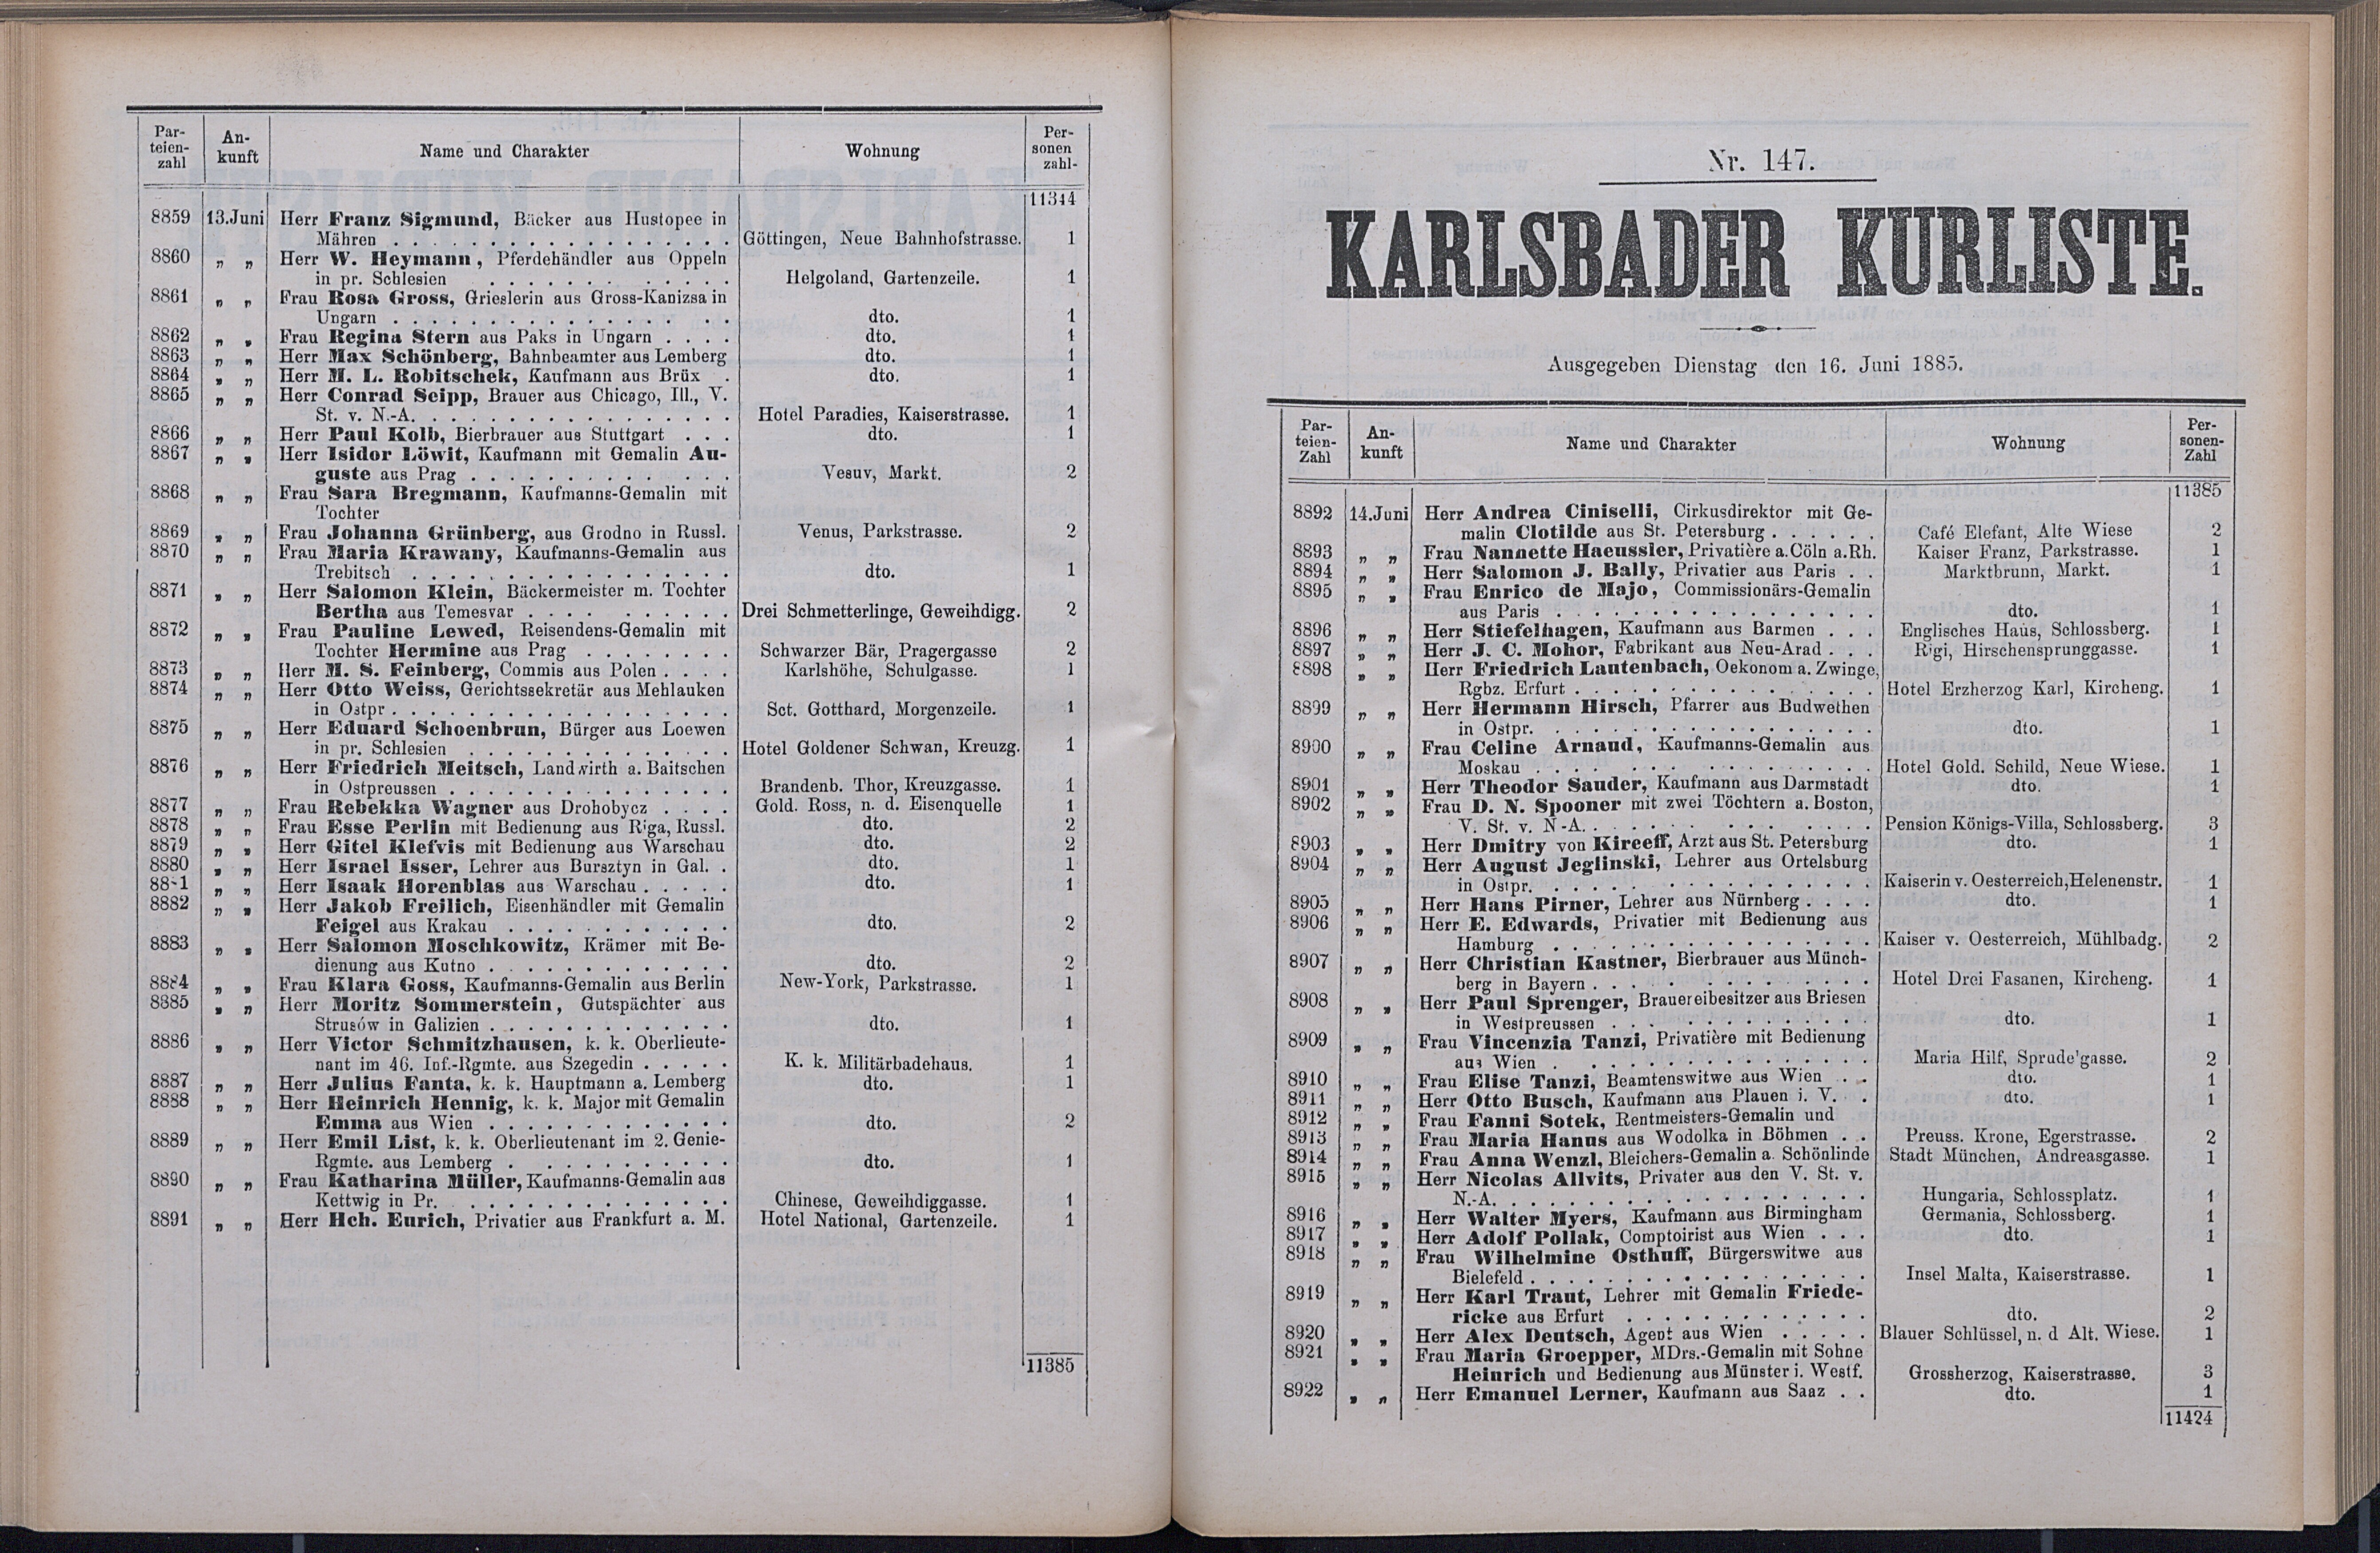 199. soap-kv_knihovna_karlsbader-kurliste-1885_2000